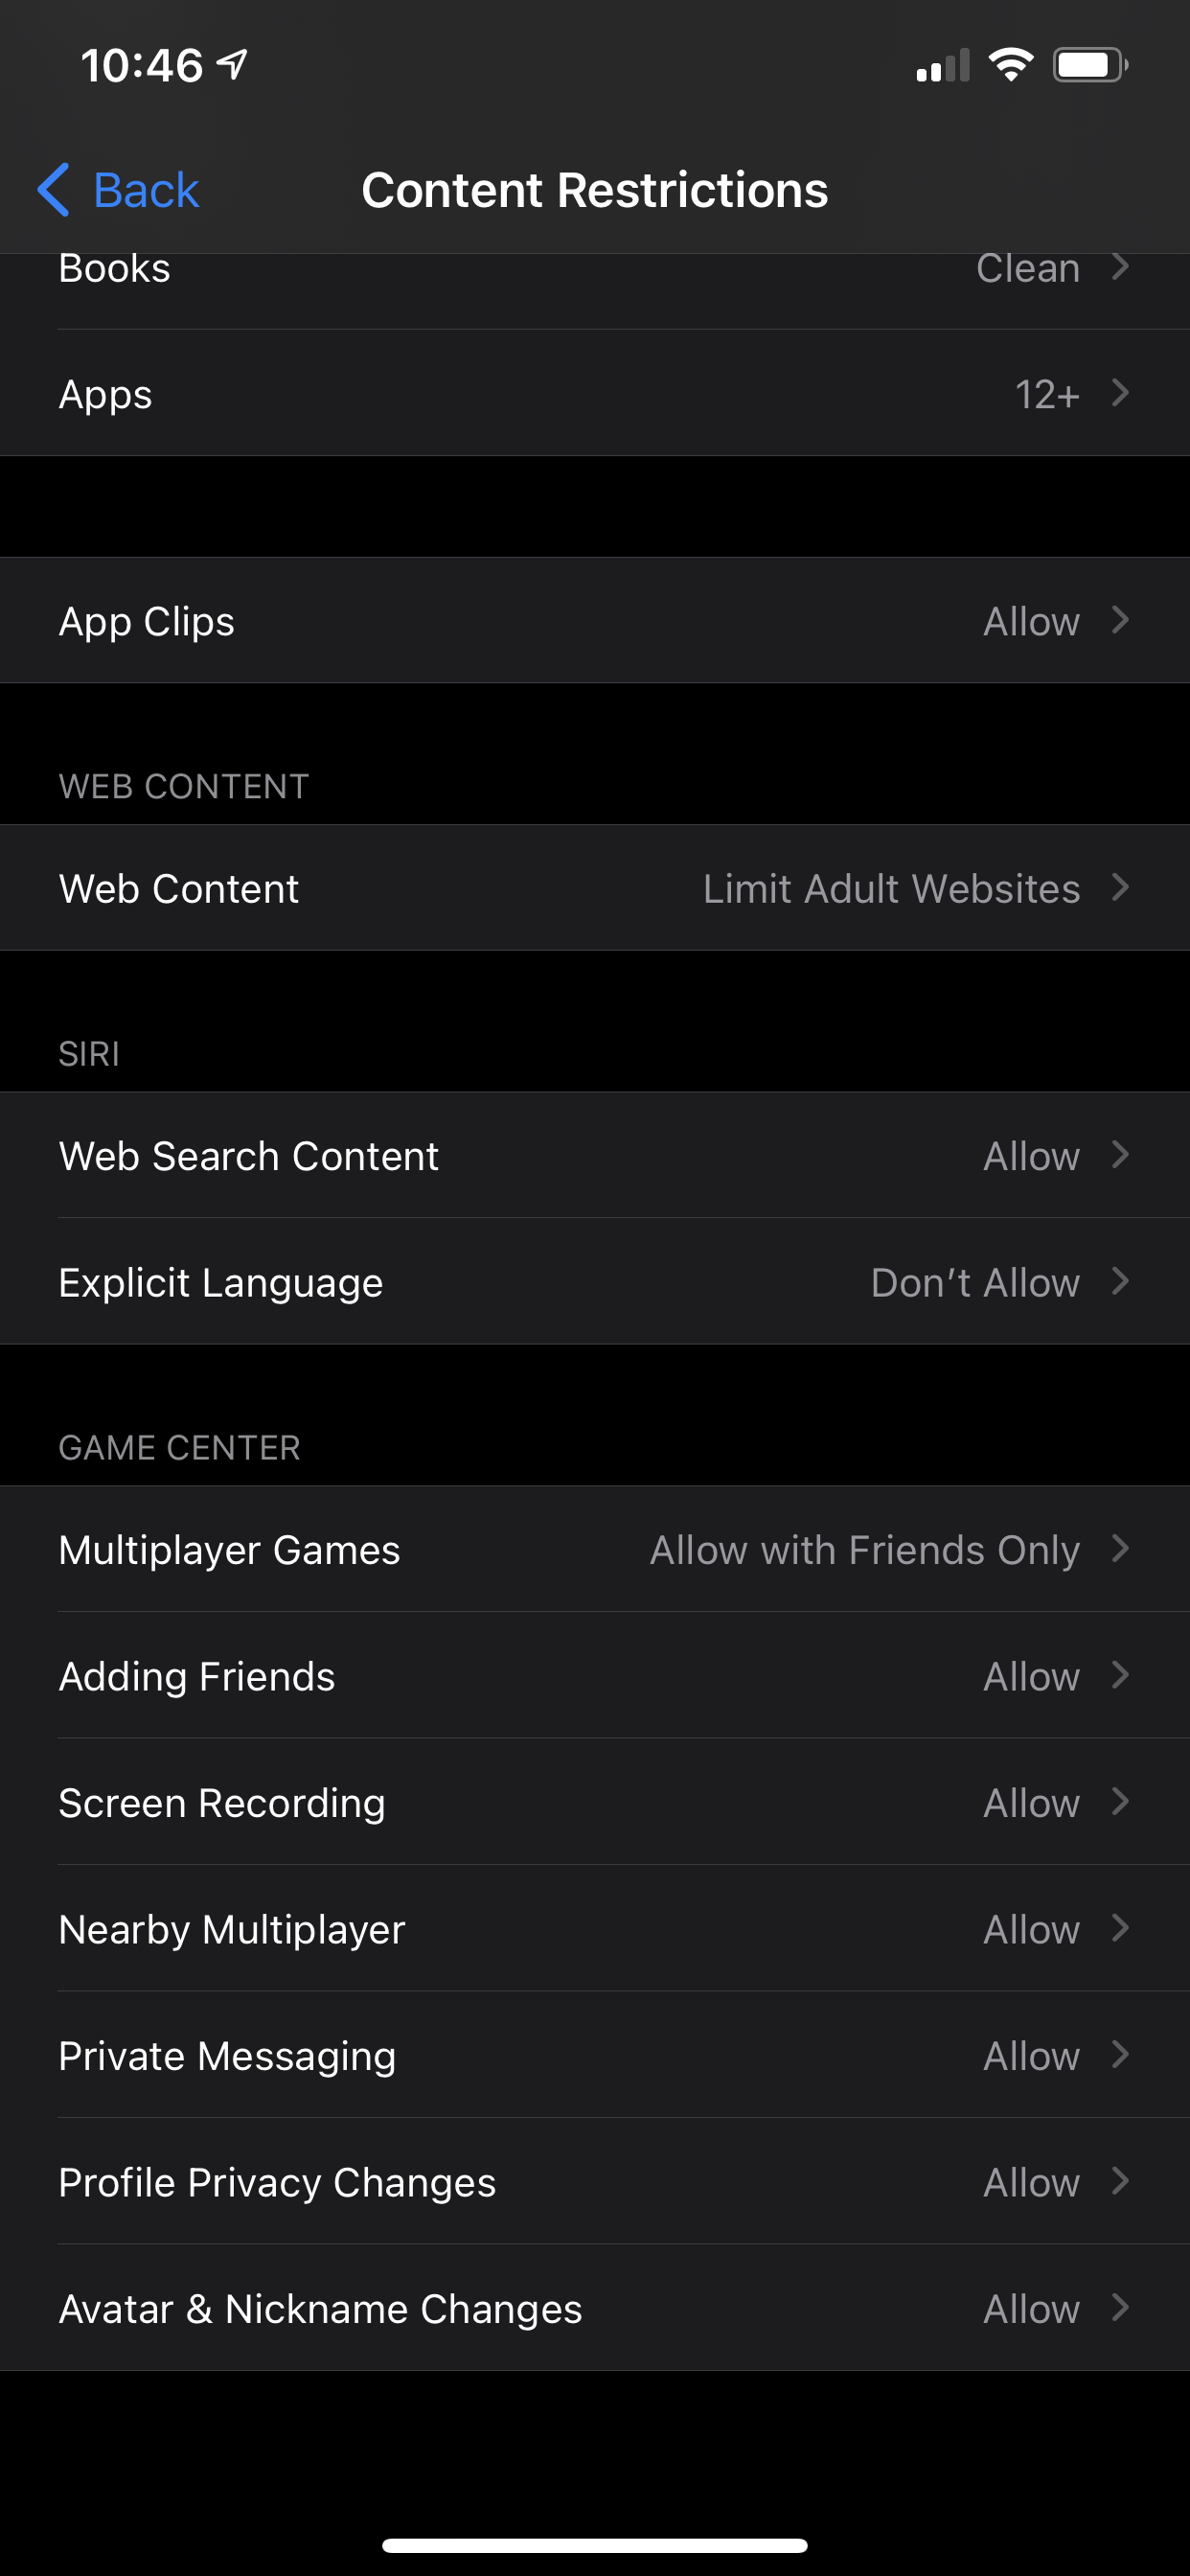 Fruit Ninja' Version 1.4 Update Brings Online Multiplayer Through Game  Center – TouchArcade